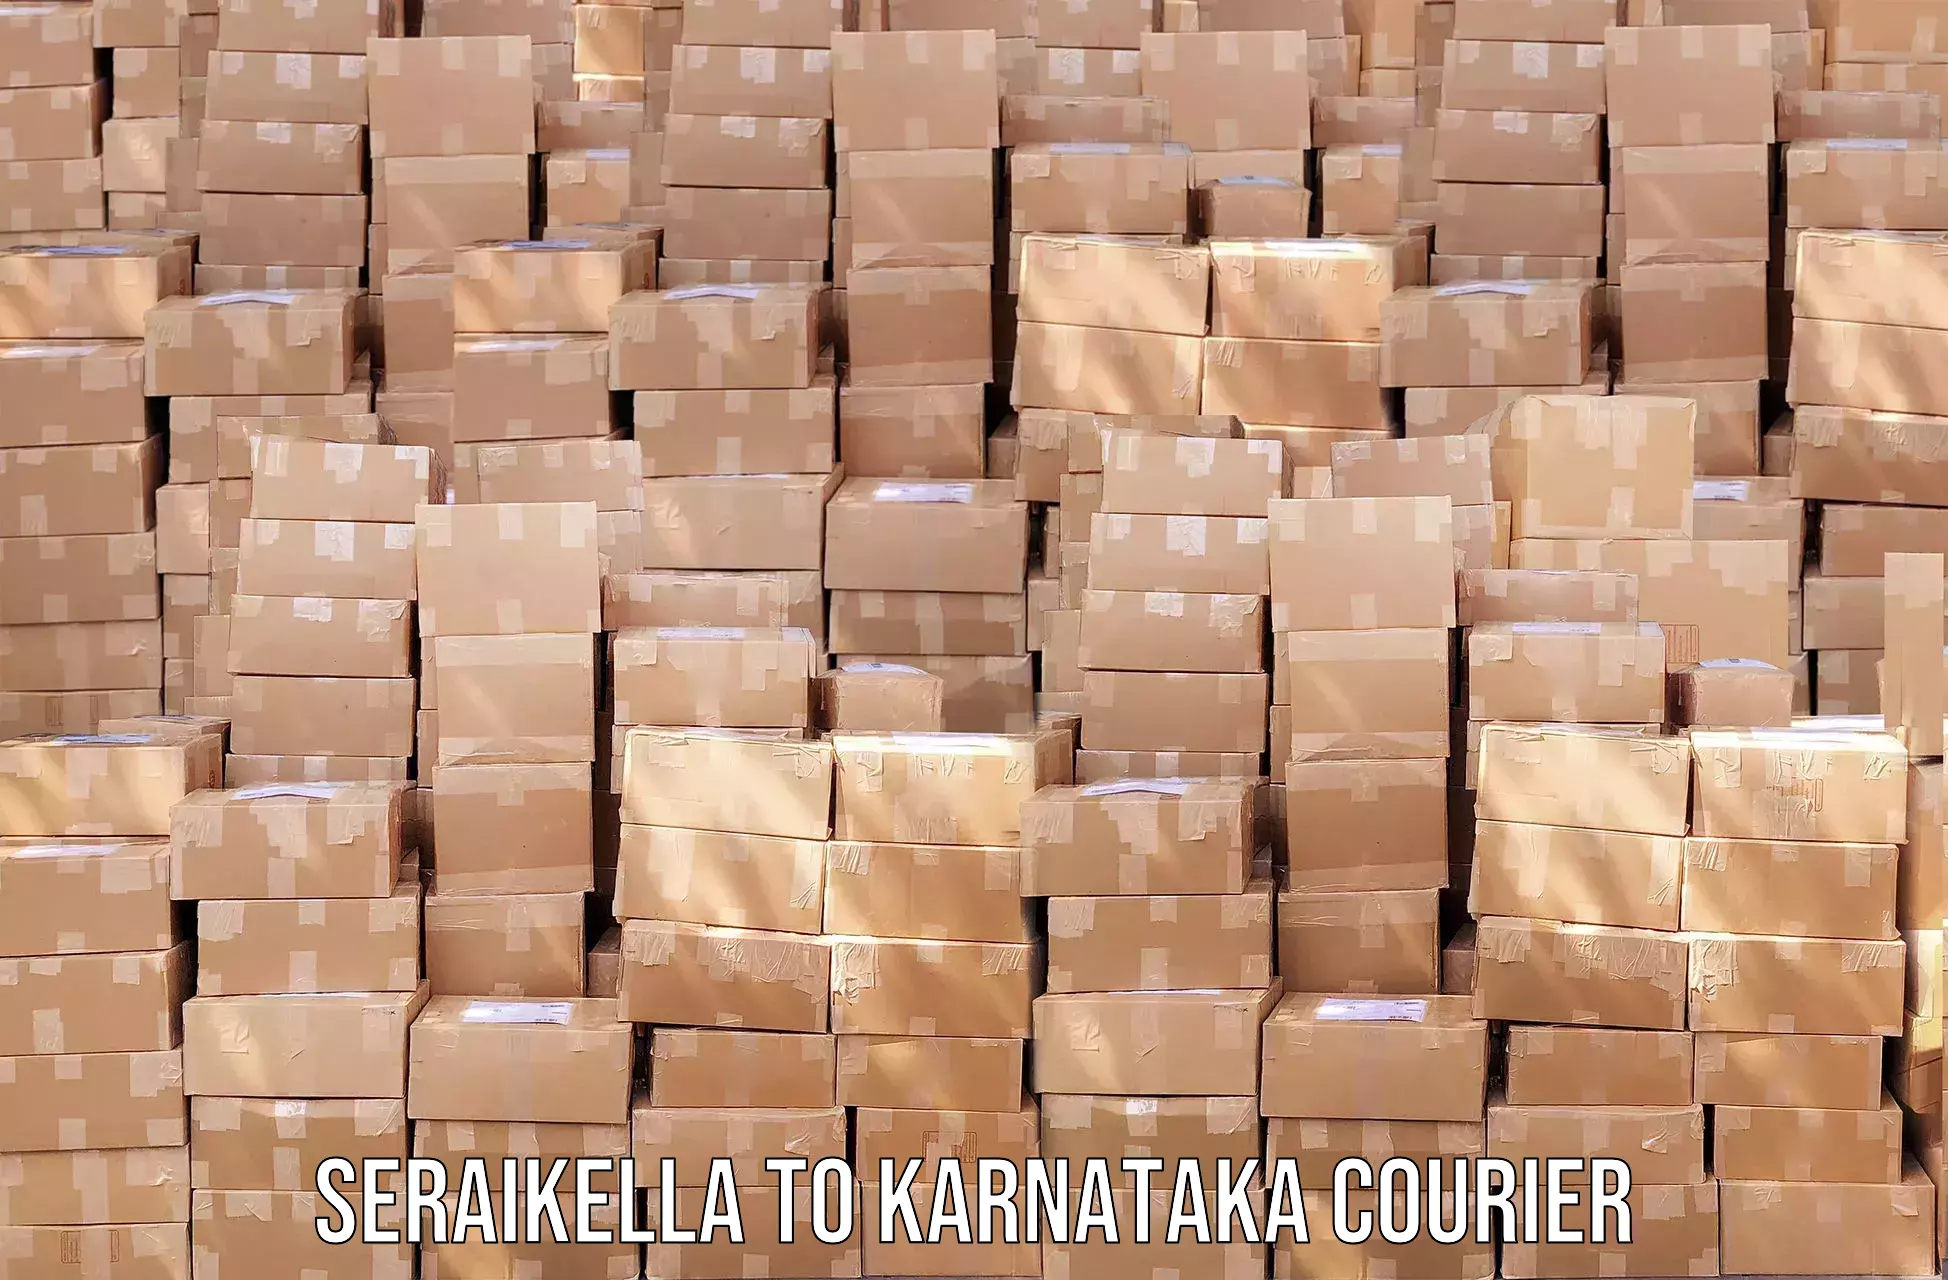 24/7 courier service in Seraikella to Sindagi